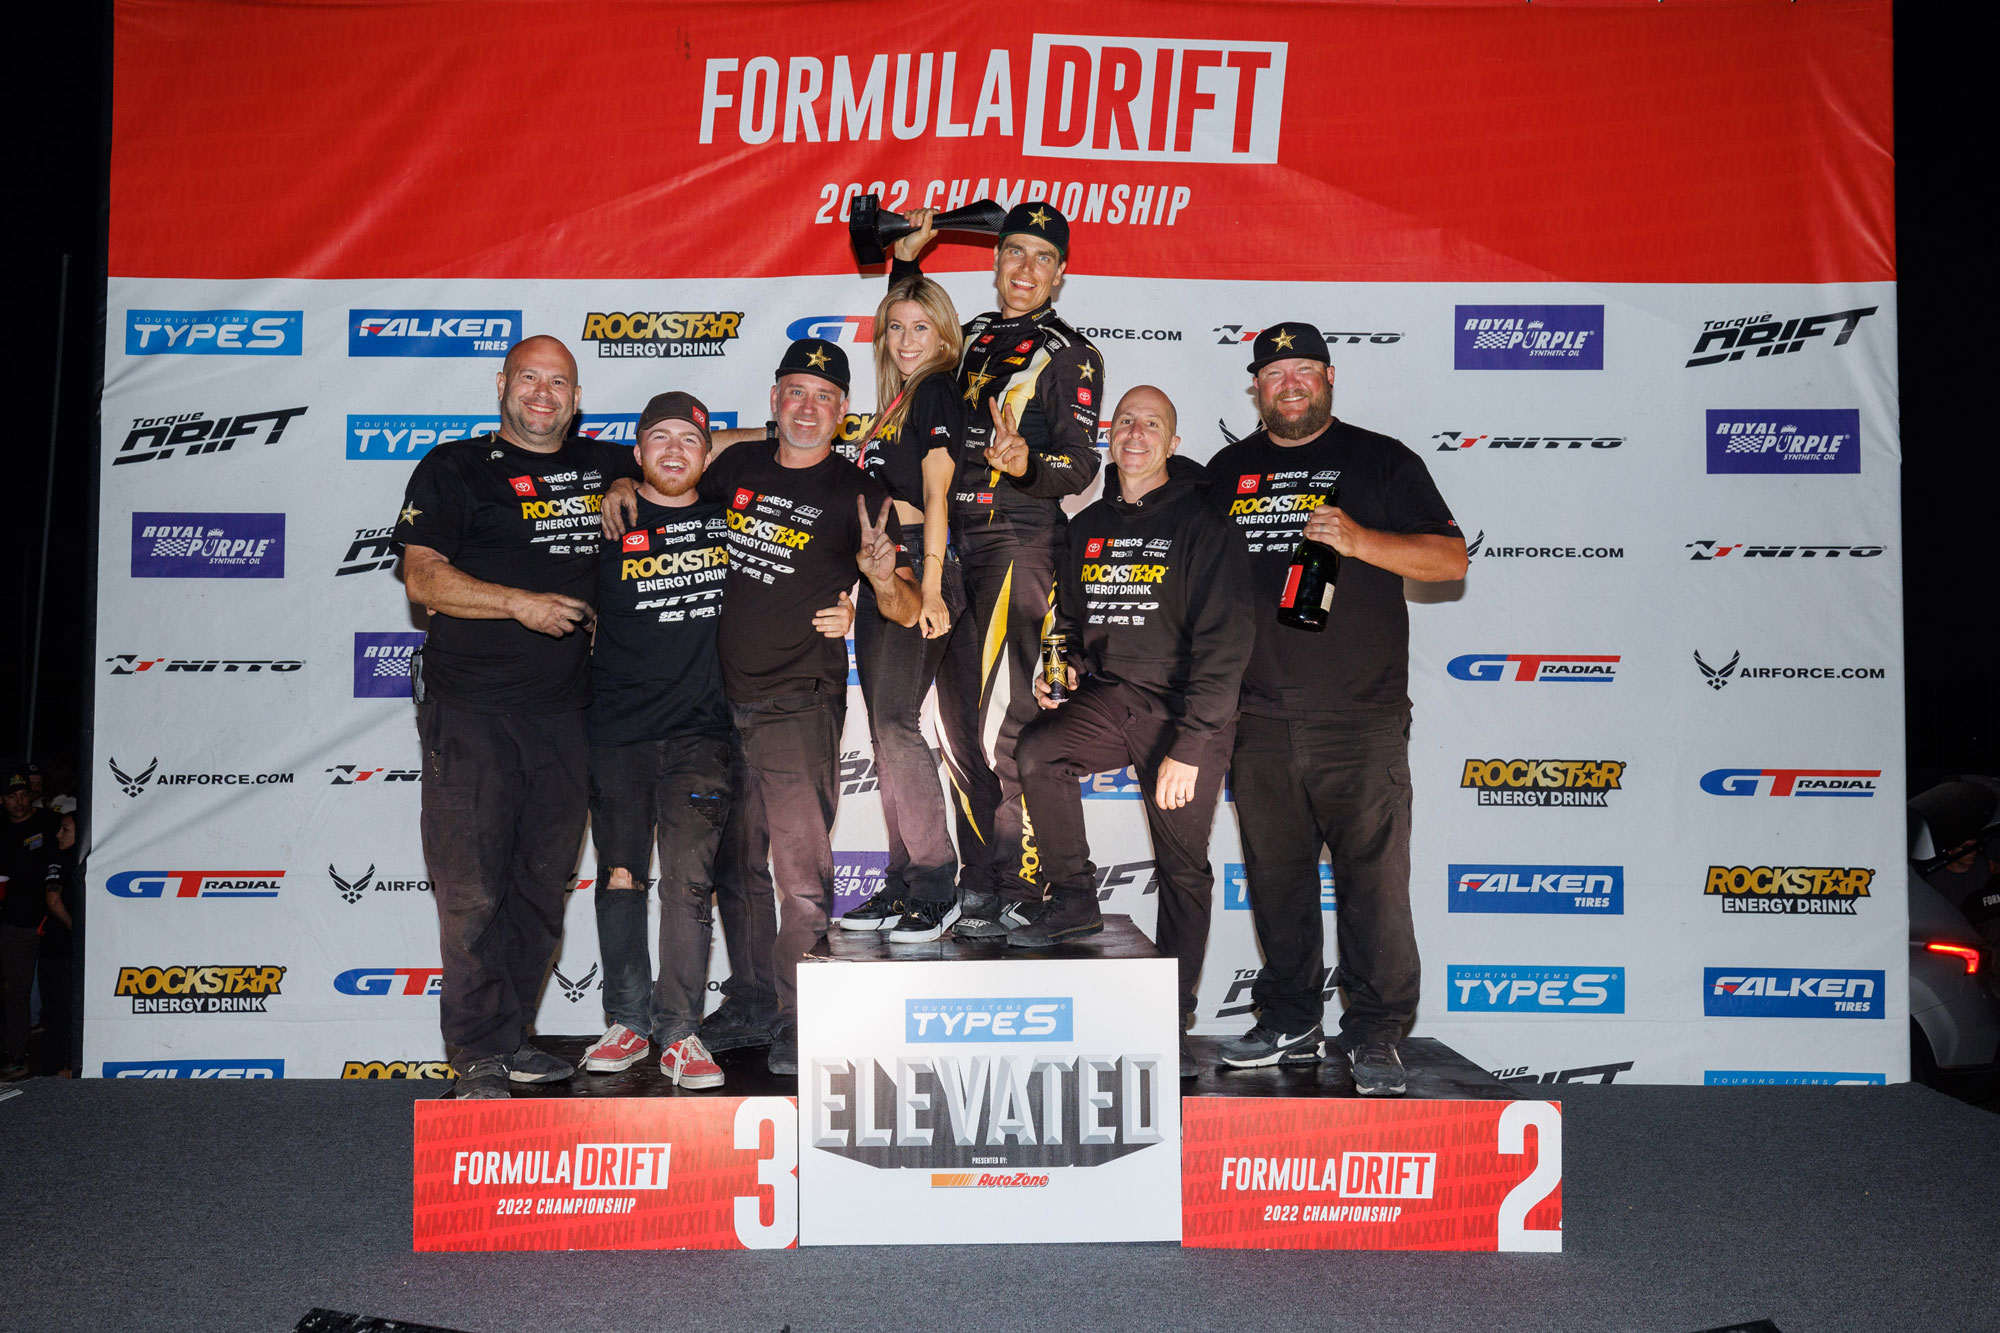 Formula Drift Utah Aasbo with trophy on podium